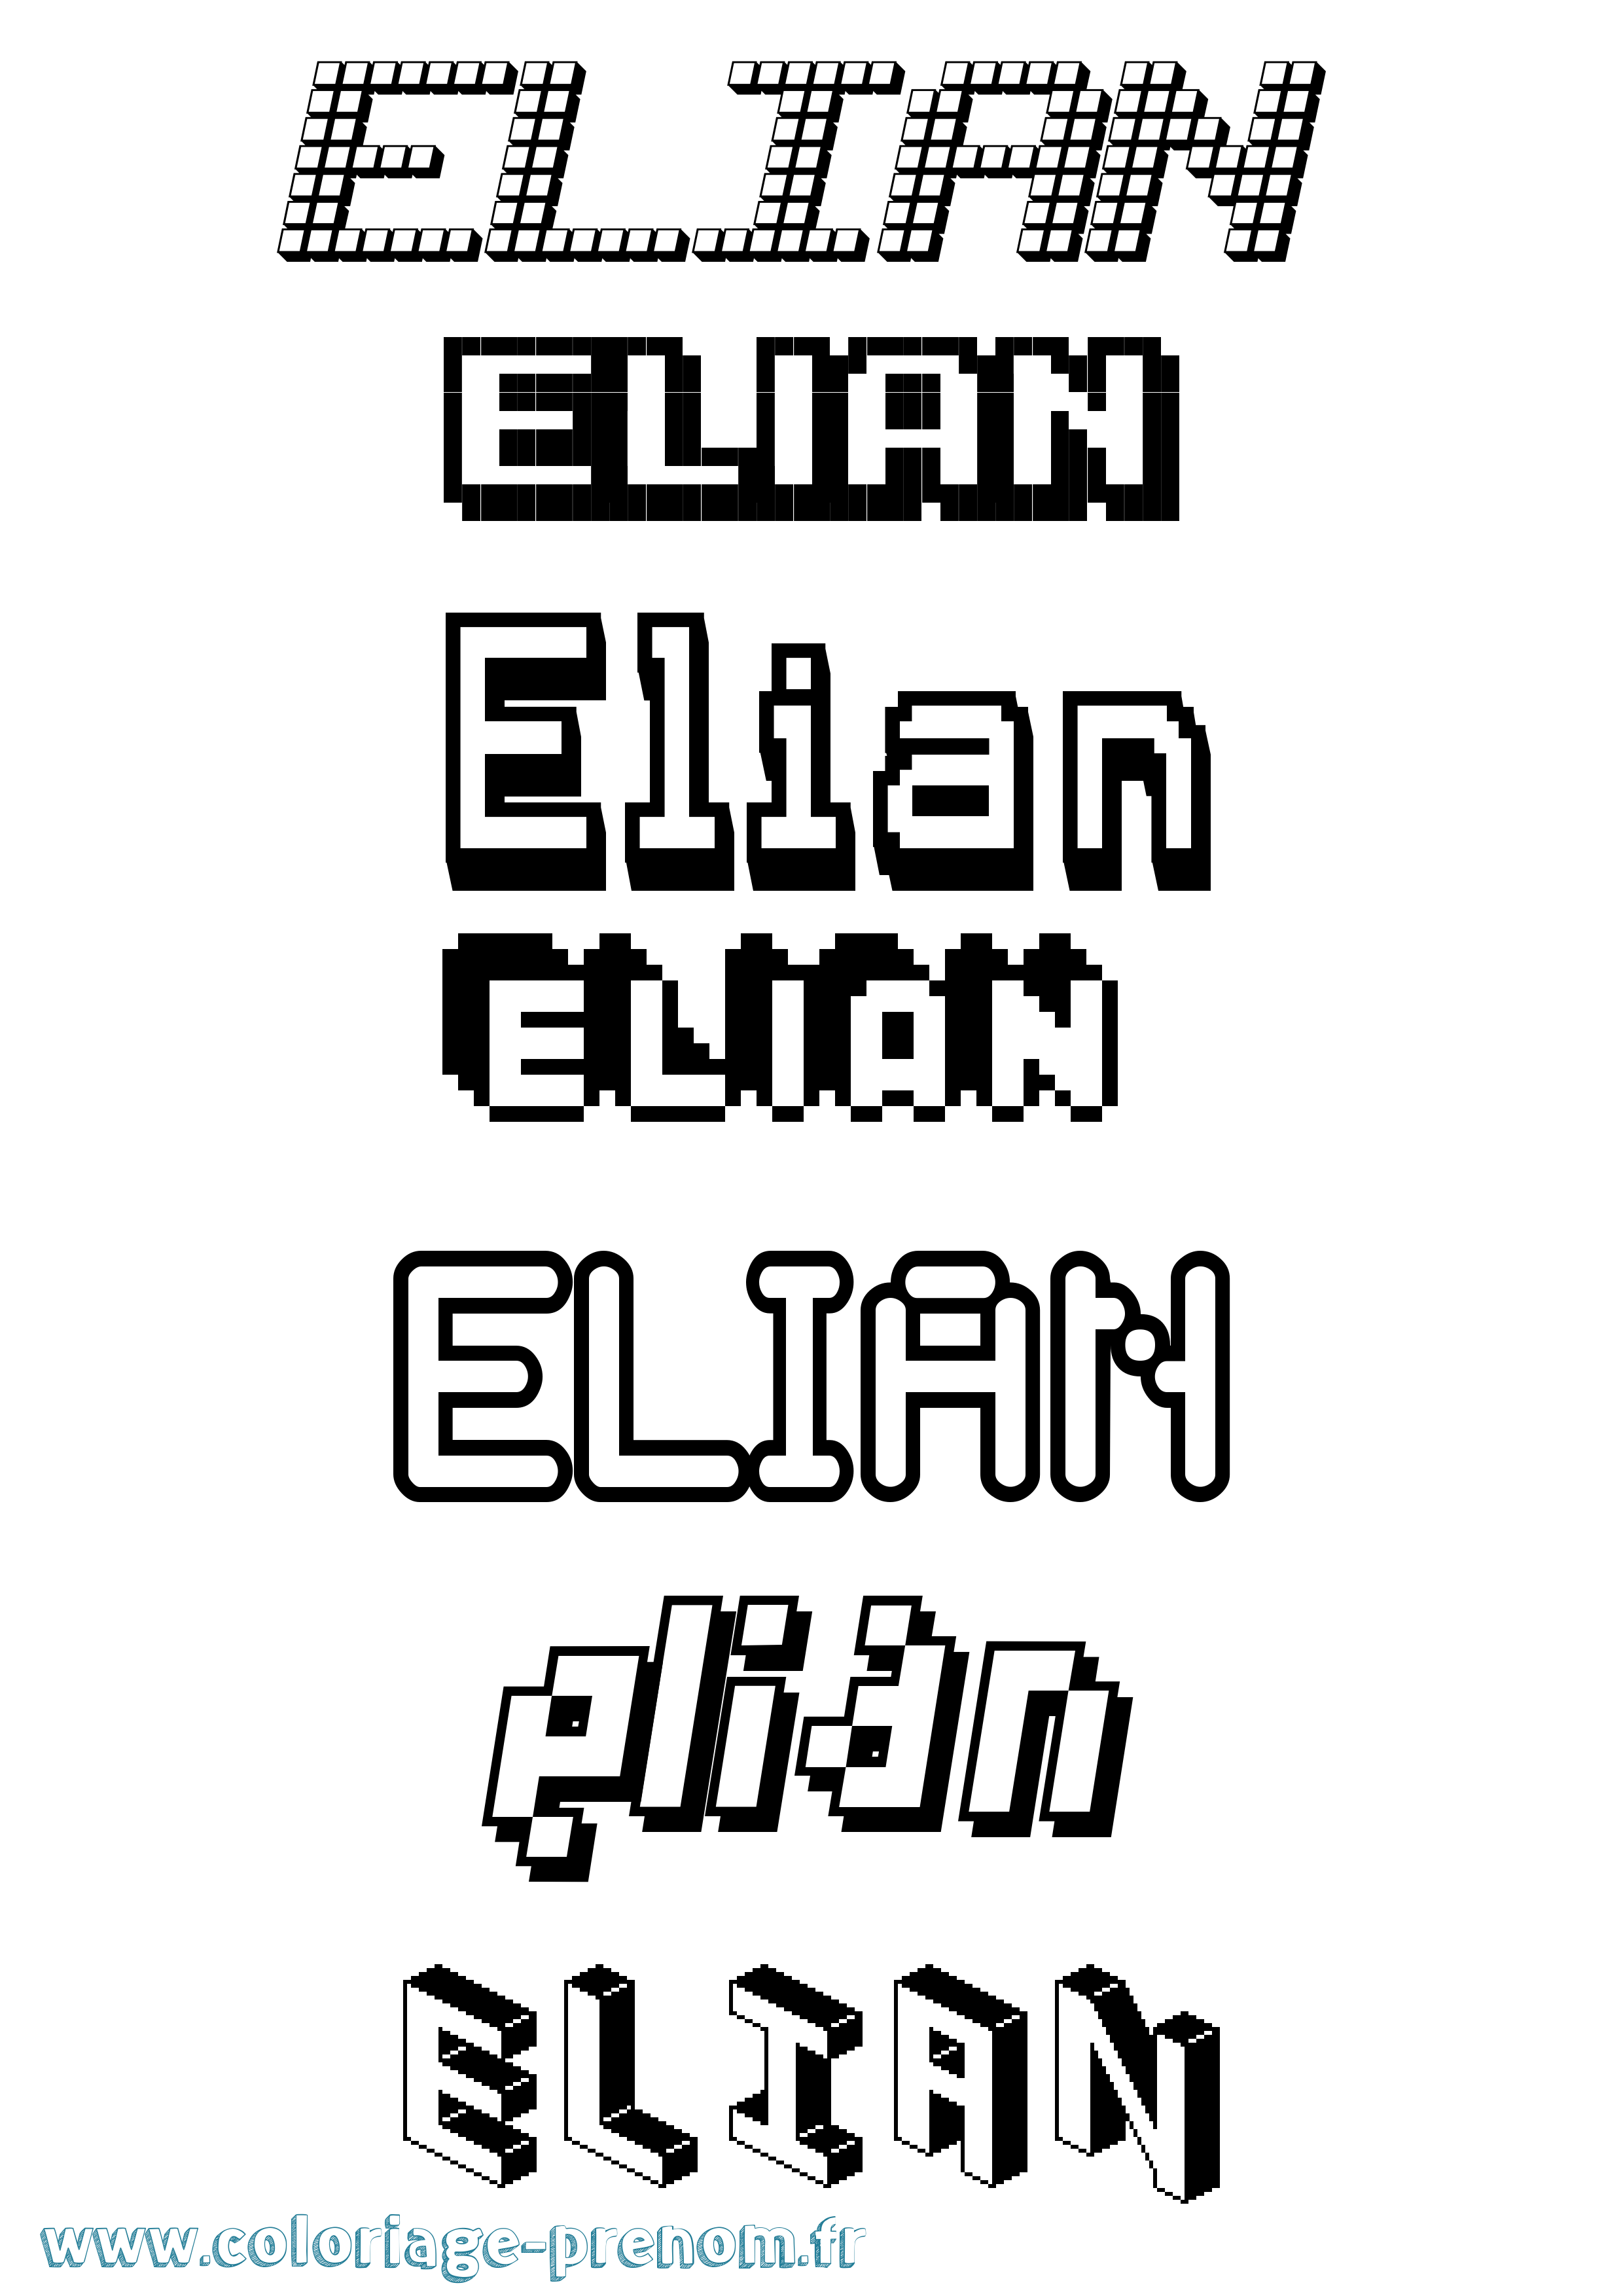 Coloriage prénom Elian Pixel